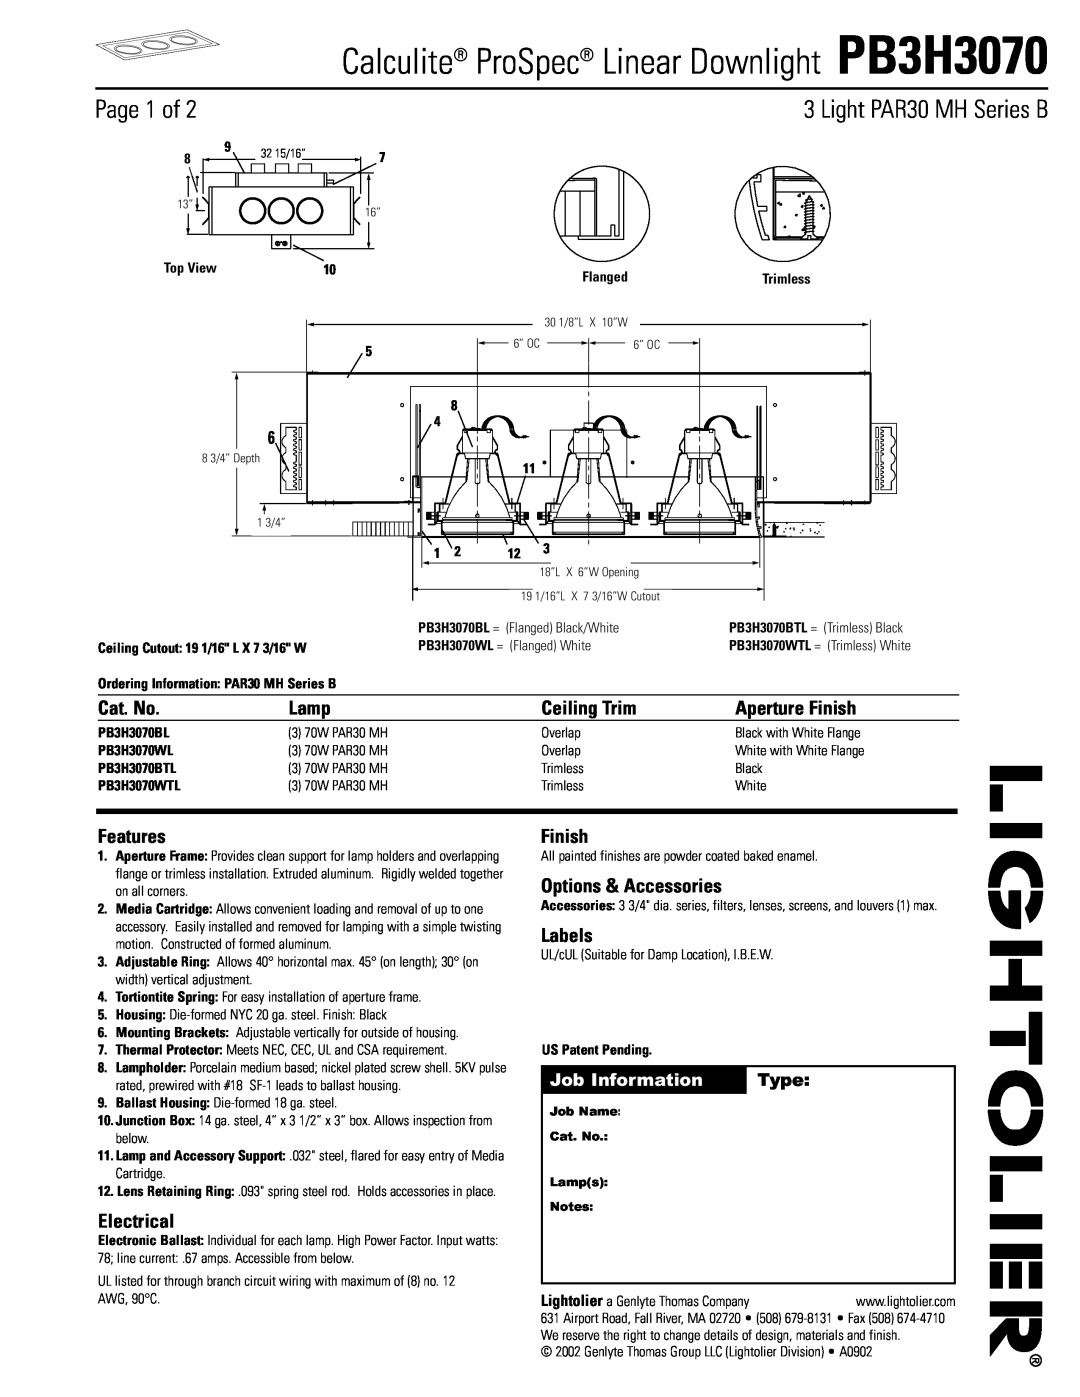 Lightolier PB3H3070 manual Page 1 of, Light PAR30 MH Series B, Cat. No, Lamp, Ceiling Trim, Aperture Finish, Features 